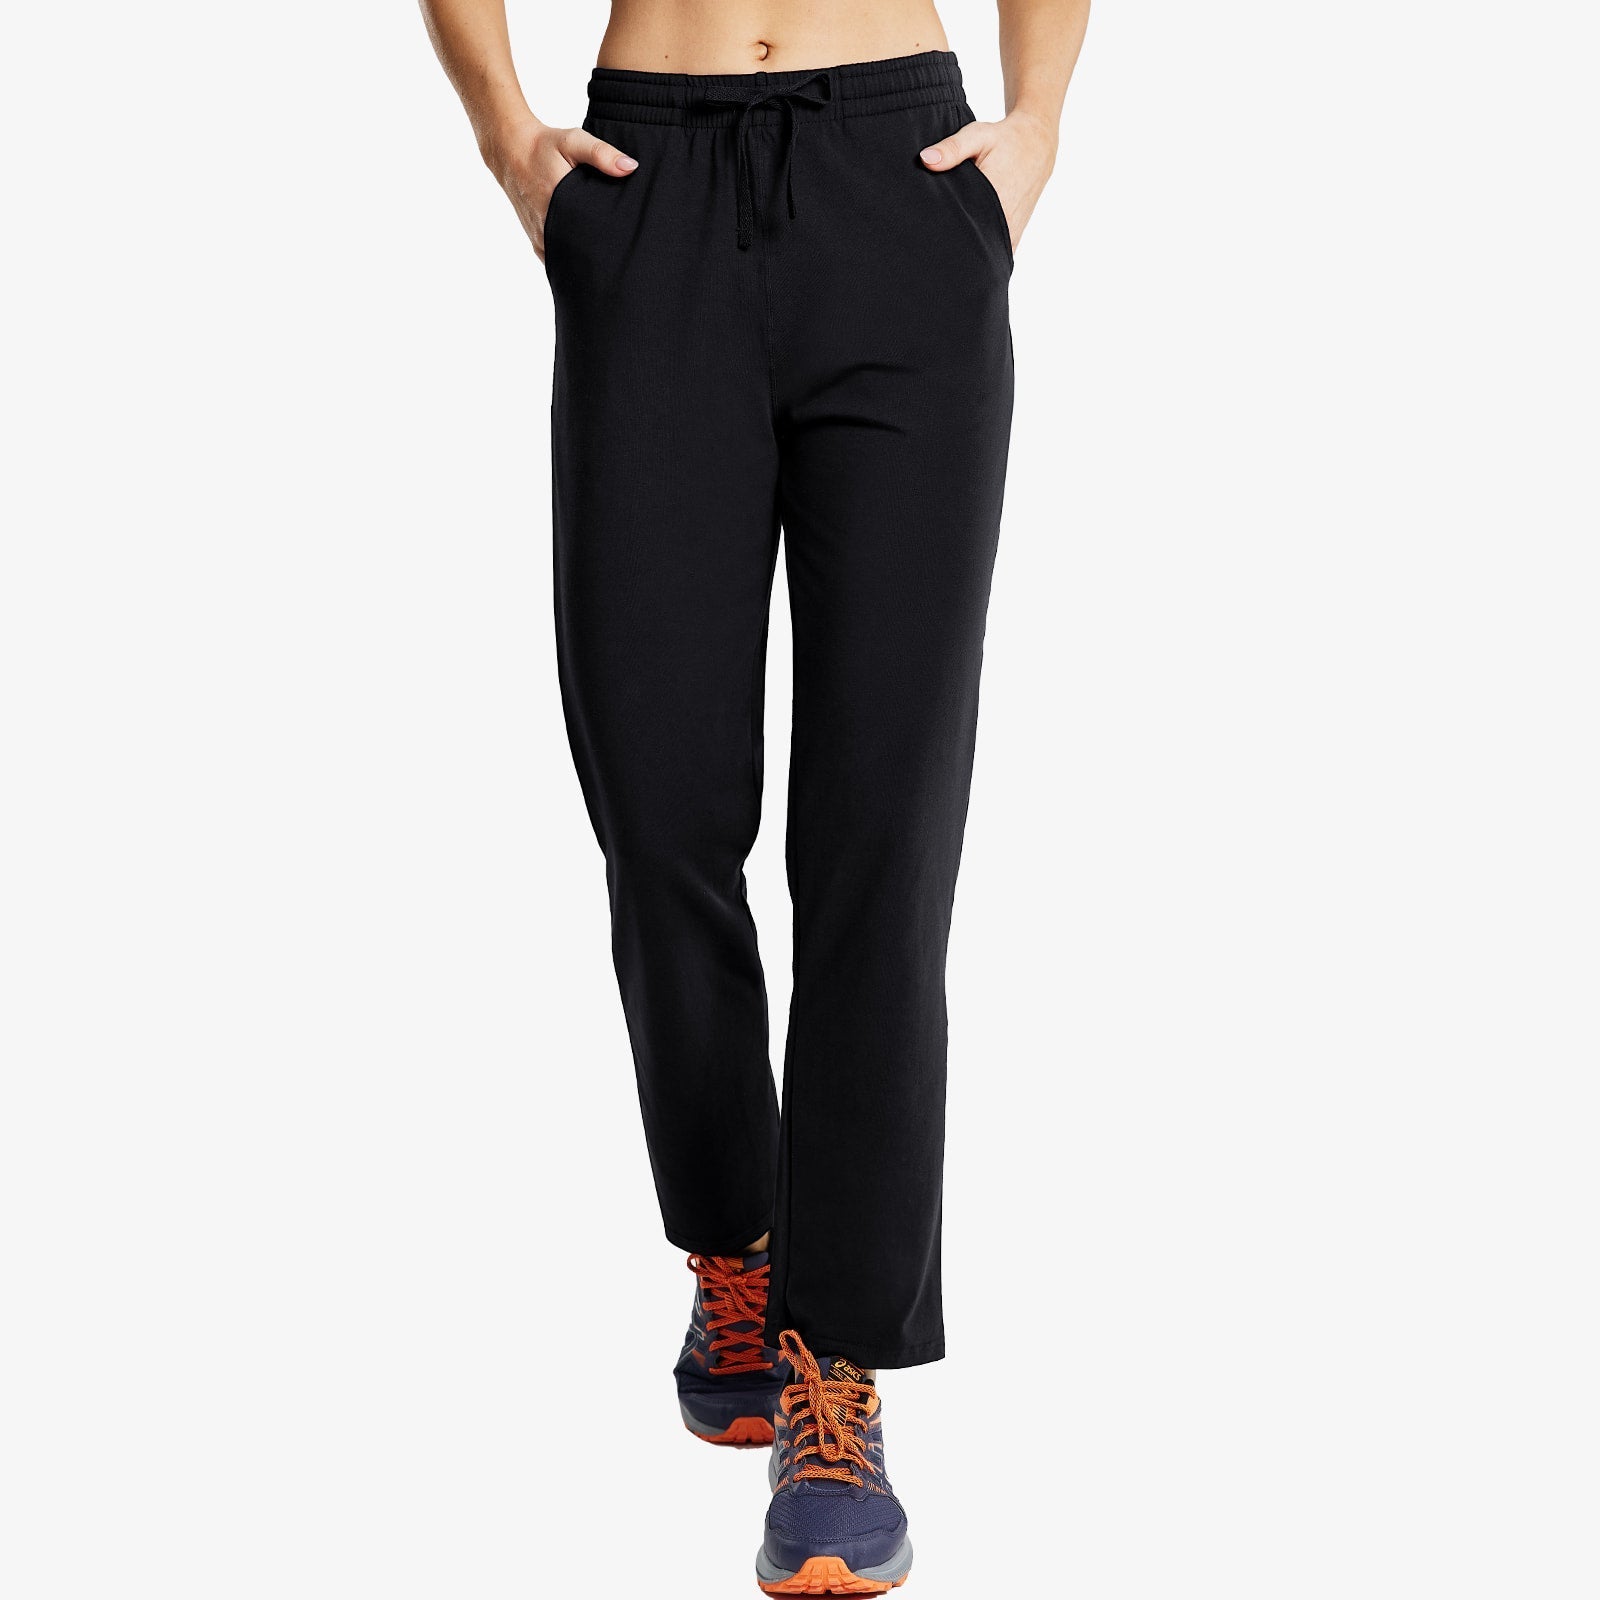 Women's Cotton Sweatpants Casual Drawstring Pants - Black / S